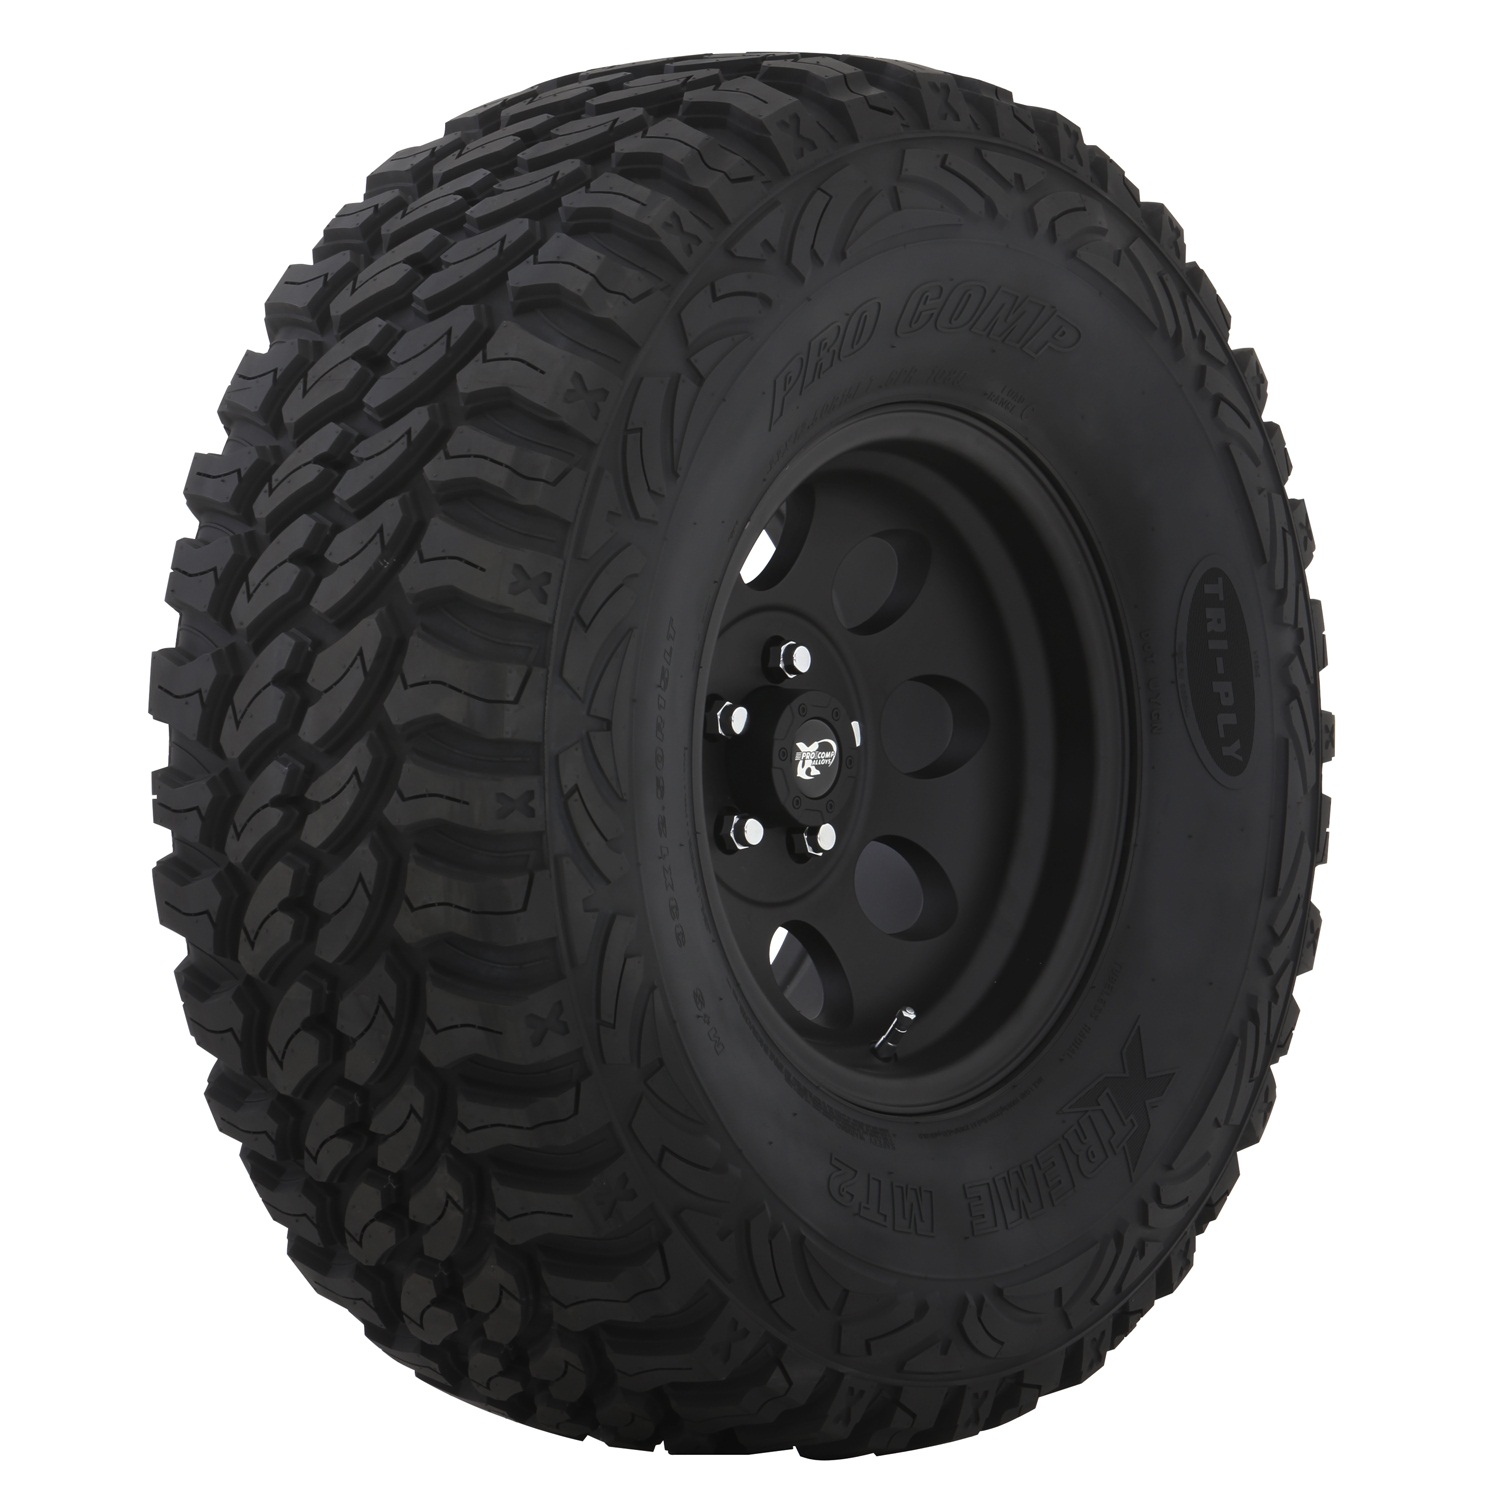 Pro Comp Tires Pro Comp Tires 76285 Pro Comp Xtreme Mud Terrain 2; Tire